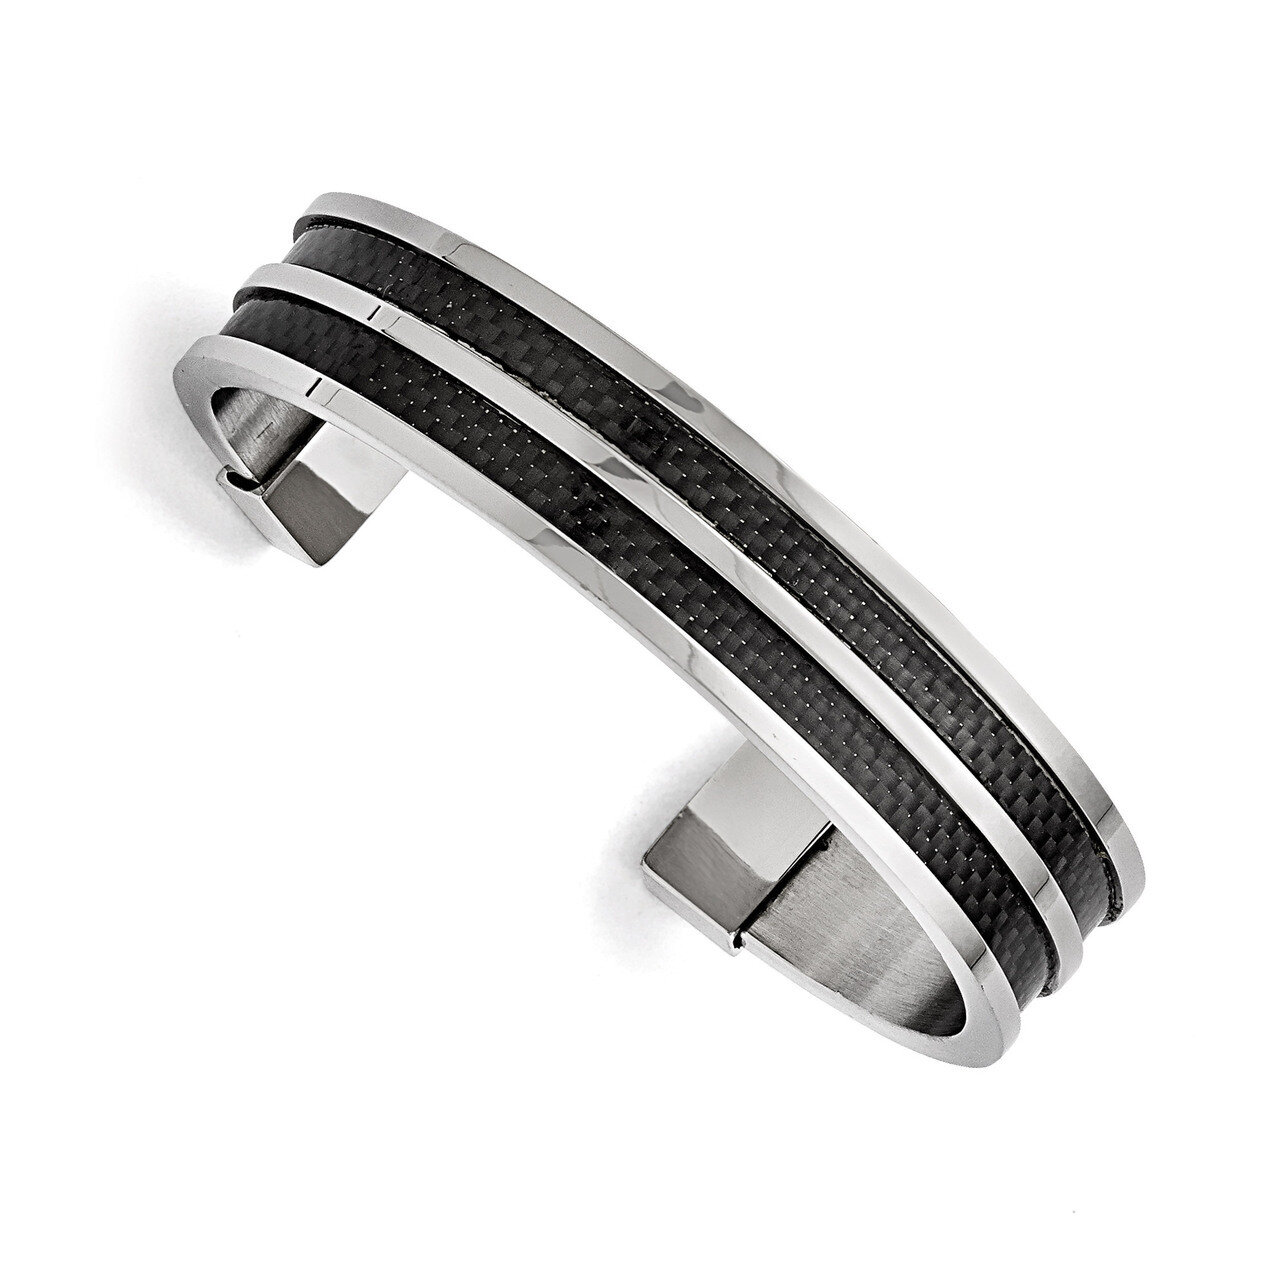 Black Carbon Fiber Polished Cuff Bangle - Stainless Steel SRB1421